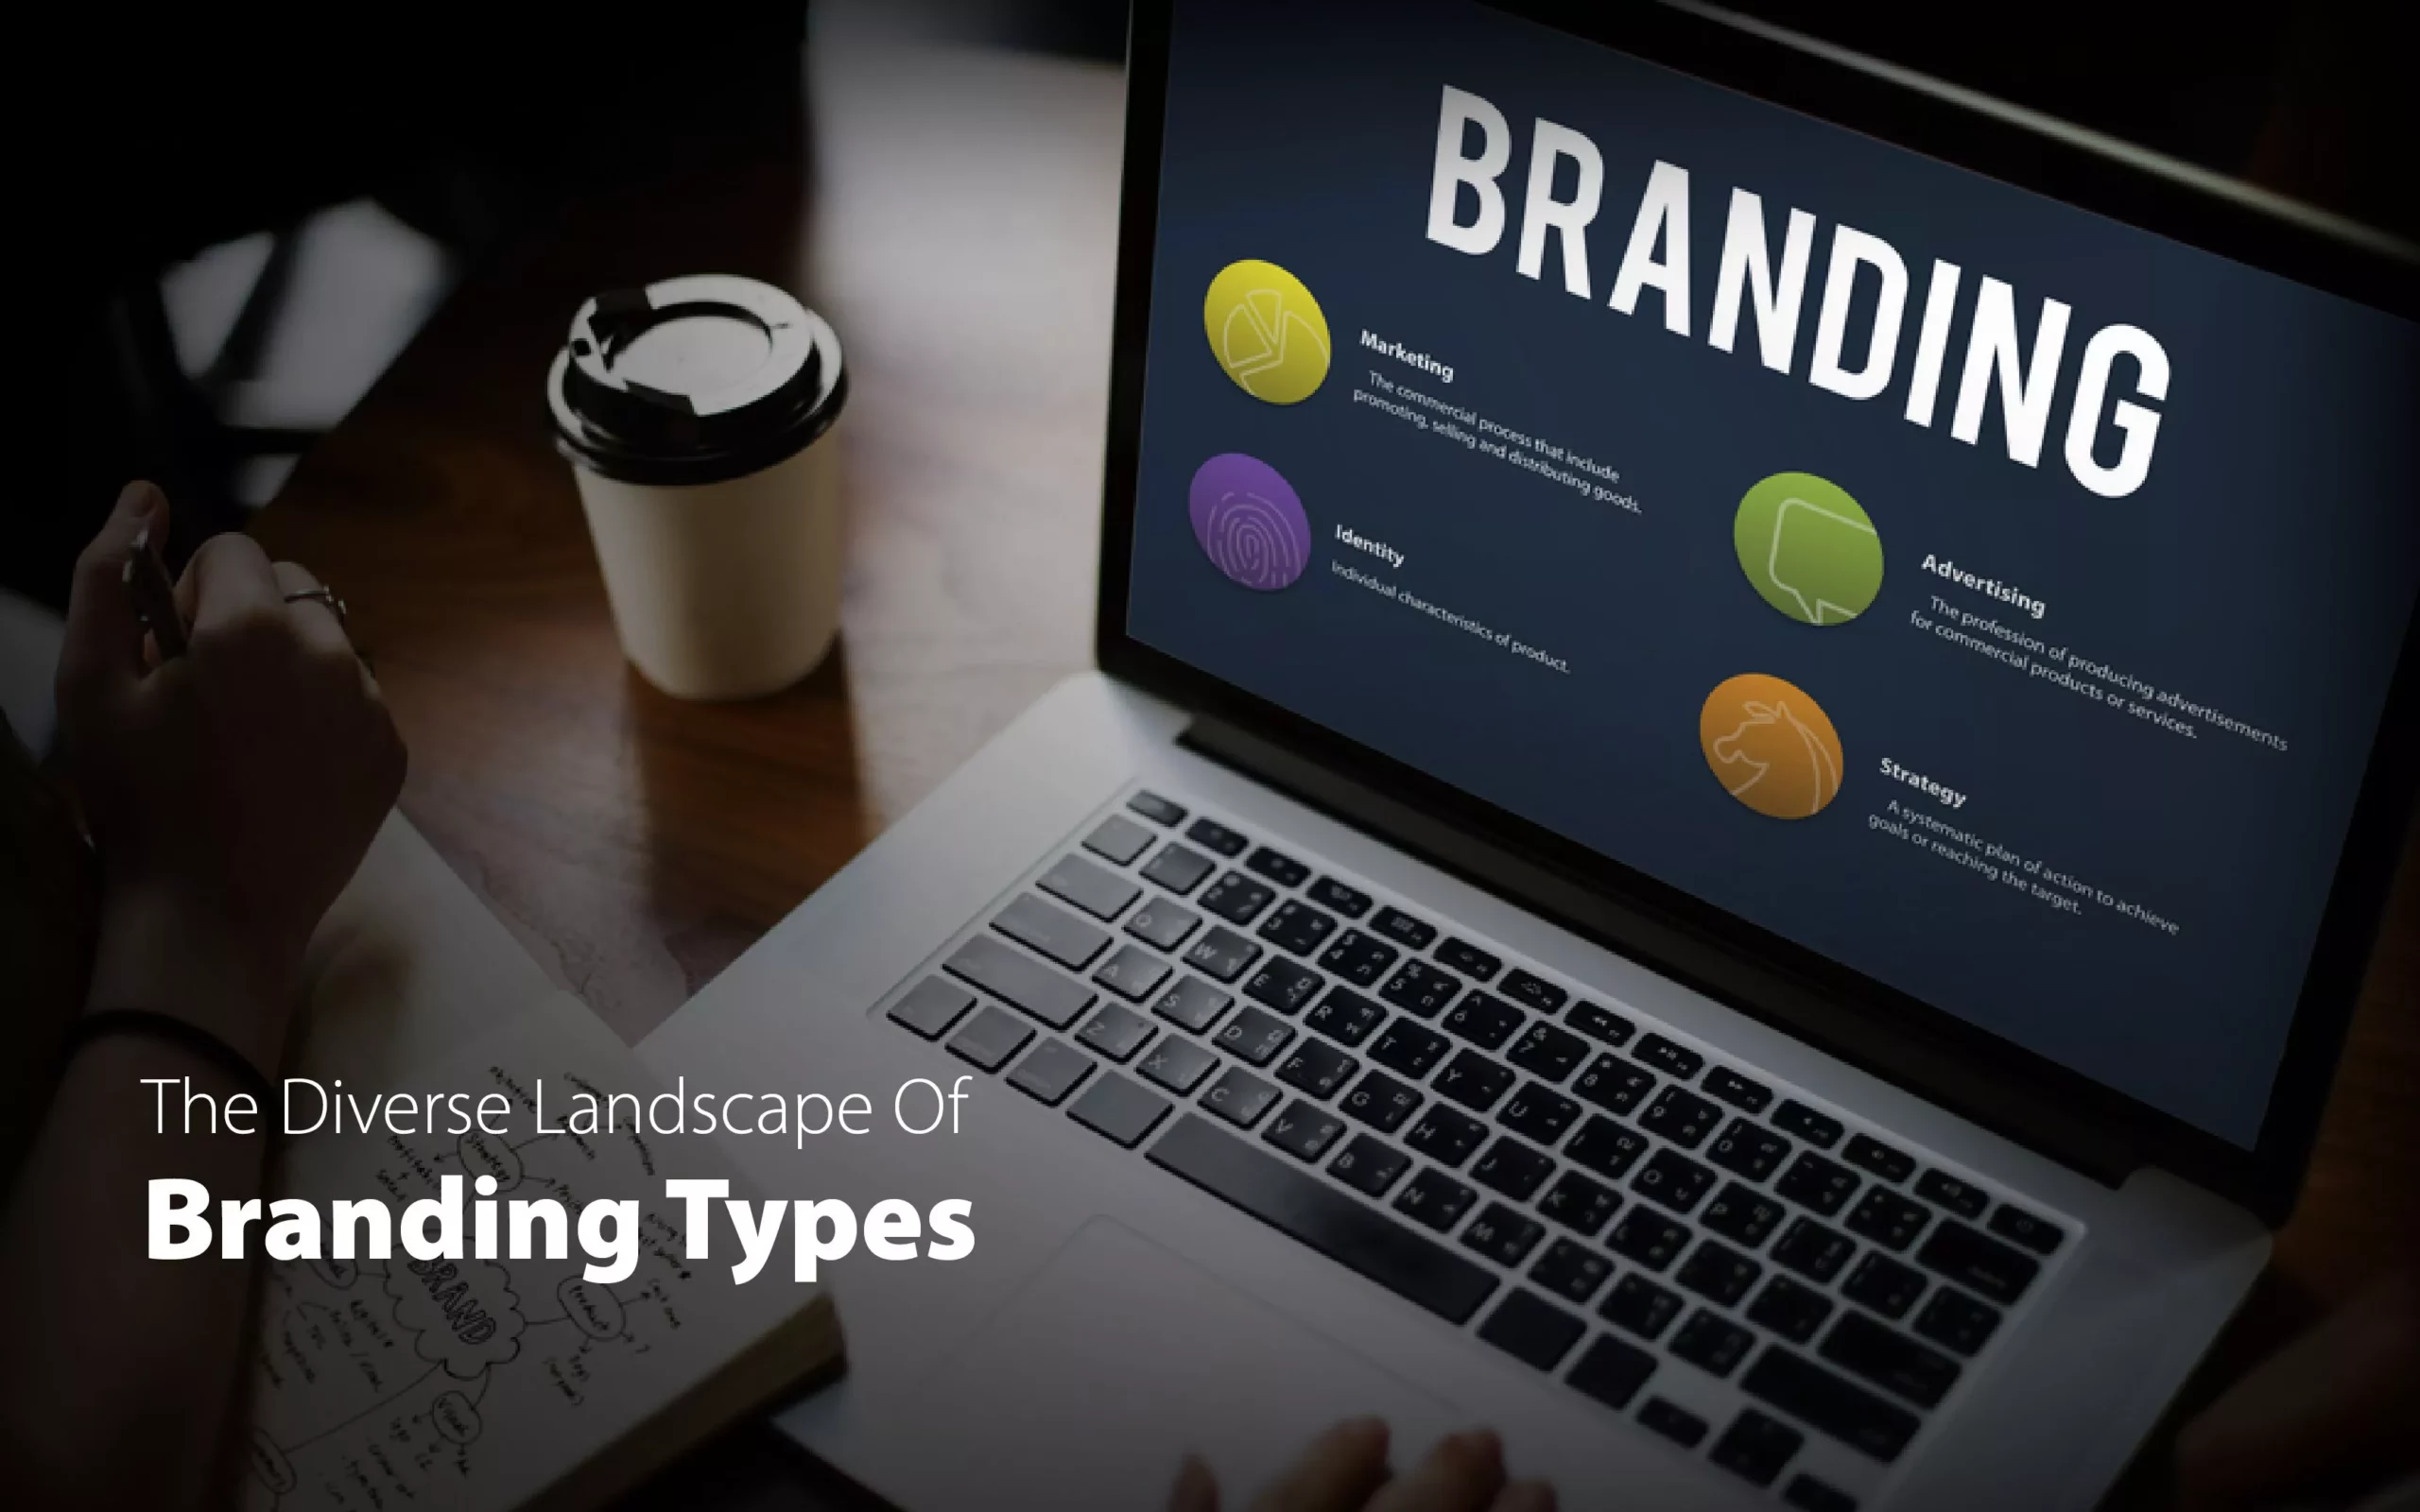 The Diverse Landscape of Branding Types